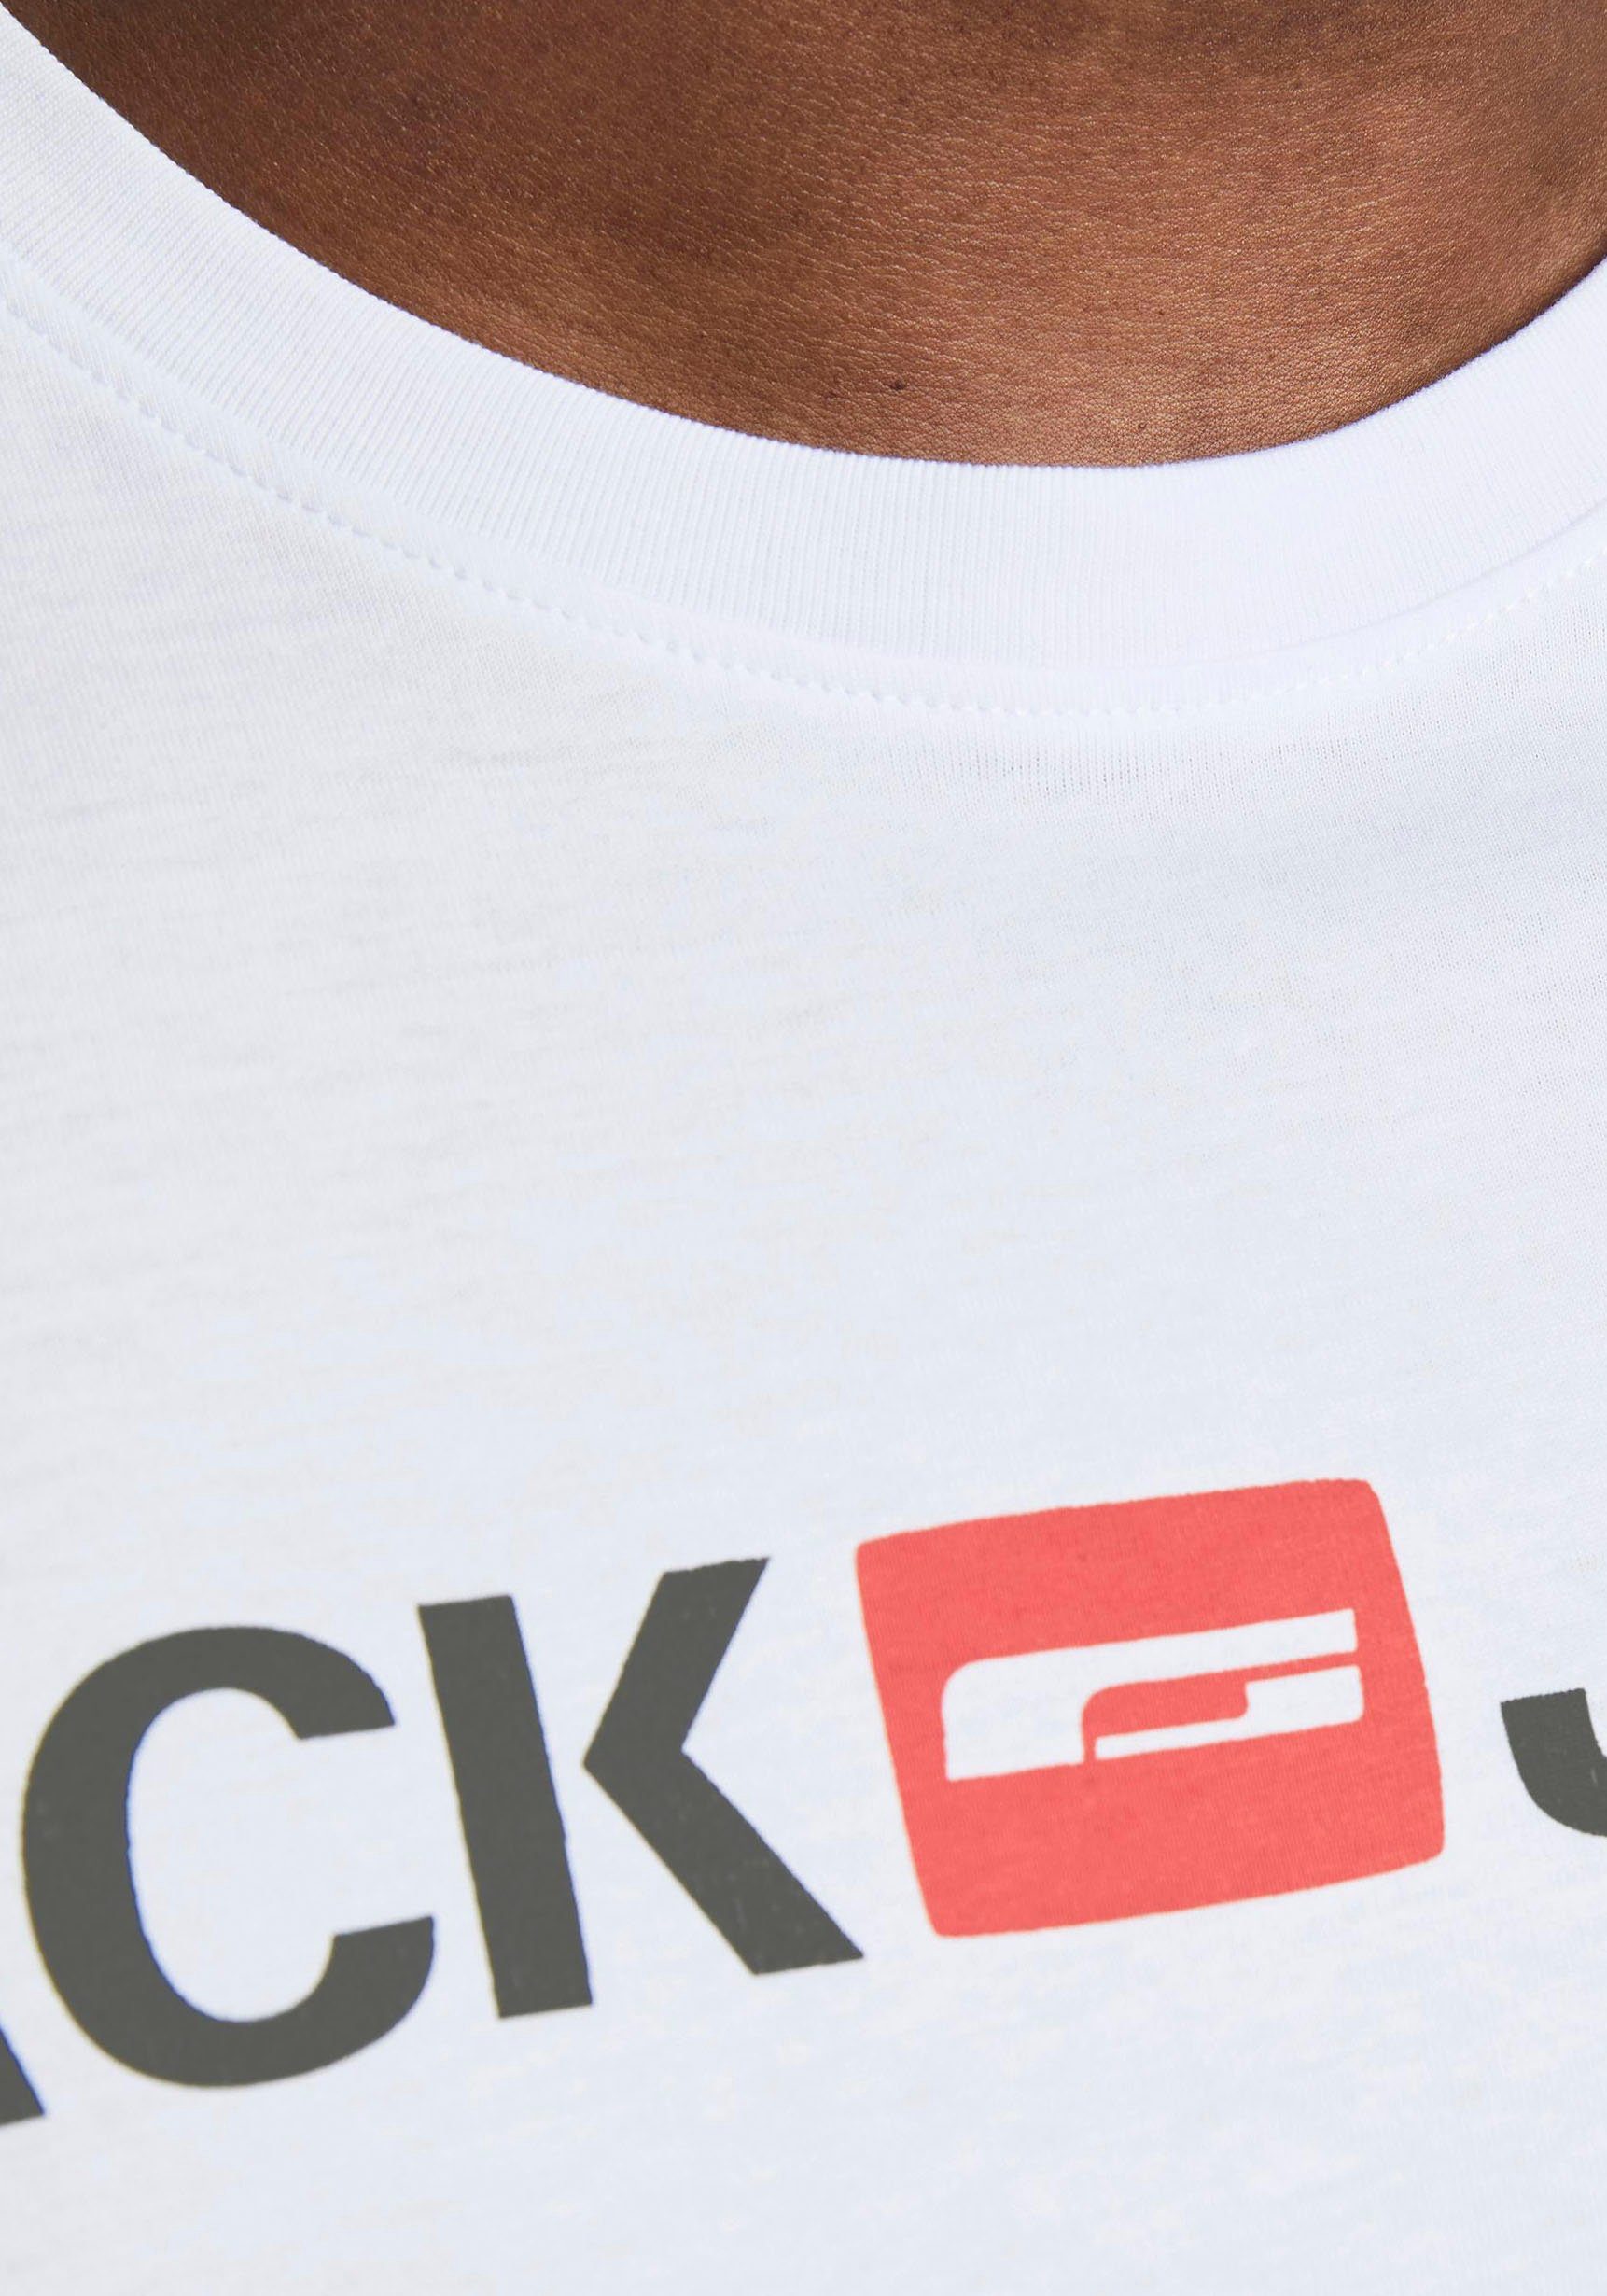 Jack & Jones PlusSize TEE T-Shirt Größe CORP weiß LOGO 6XL bis